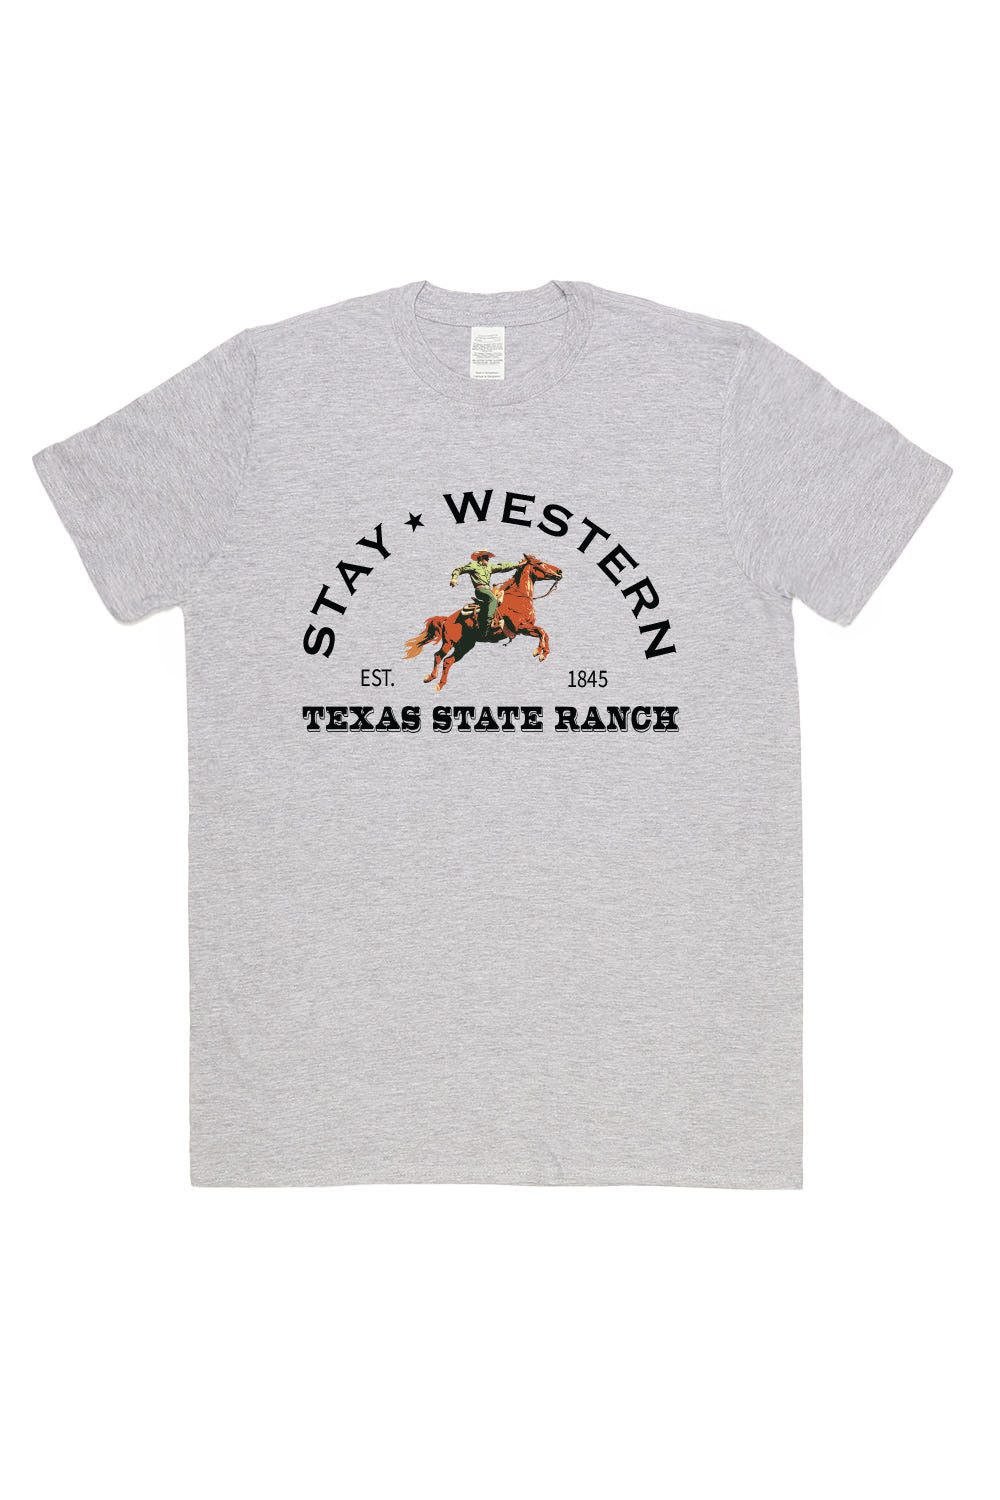 Stay Western T-Shirt in Ash Grey (Custom Packs)